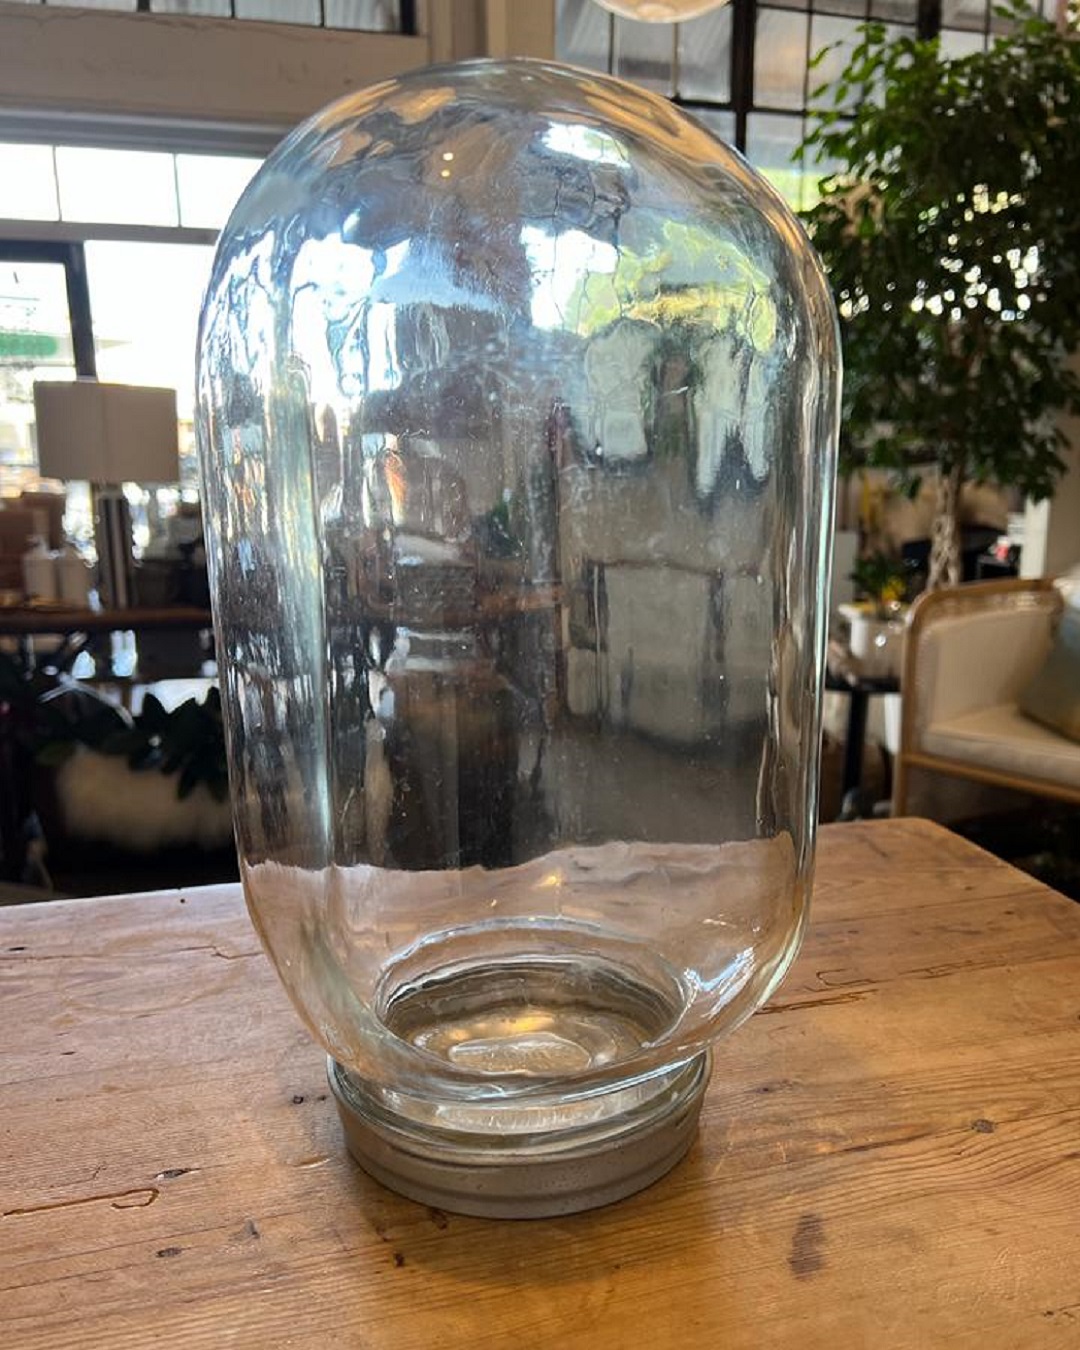 Vintage glass jar upside down on table